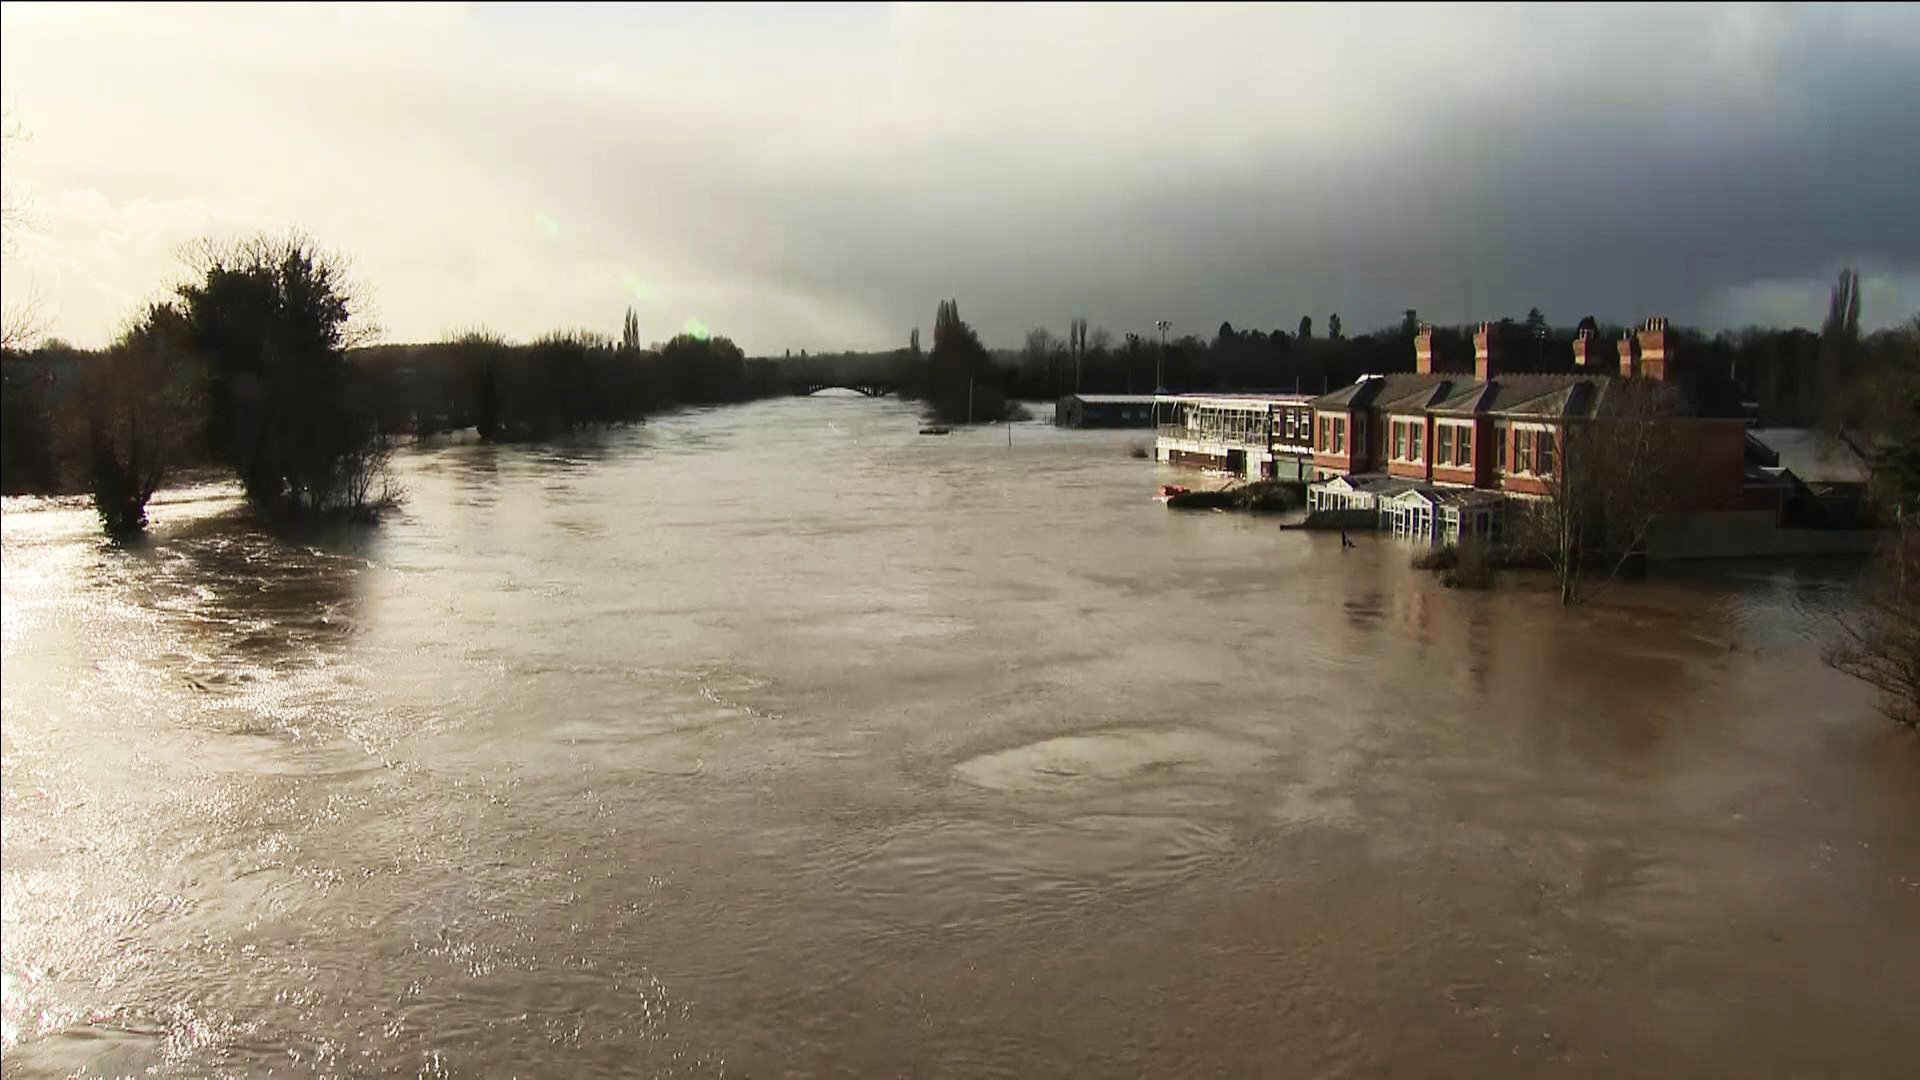 Hereford Residents' Flood Misery 17/02/20